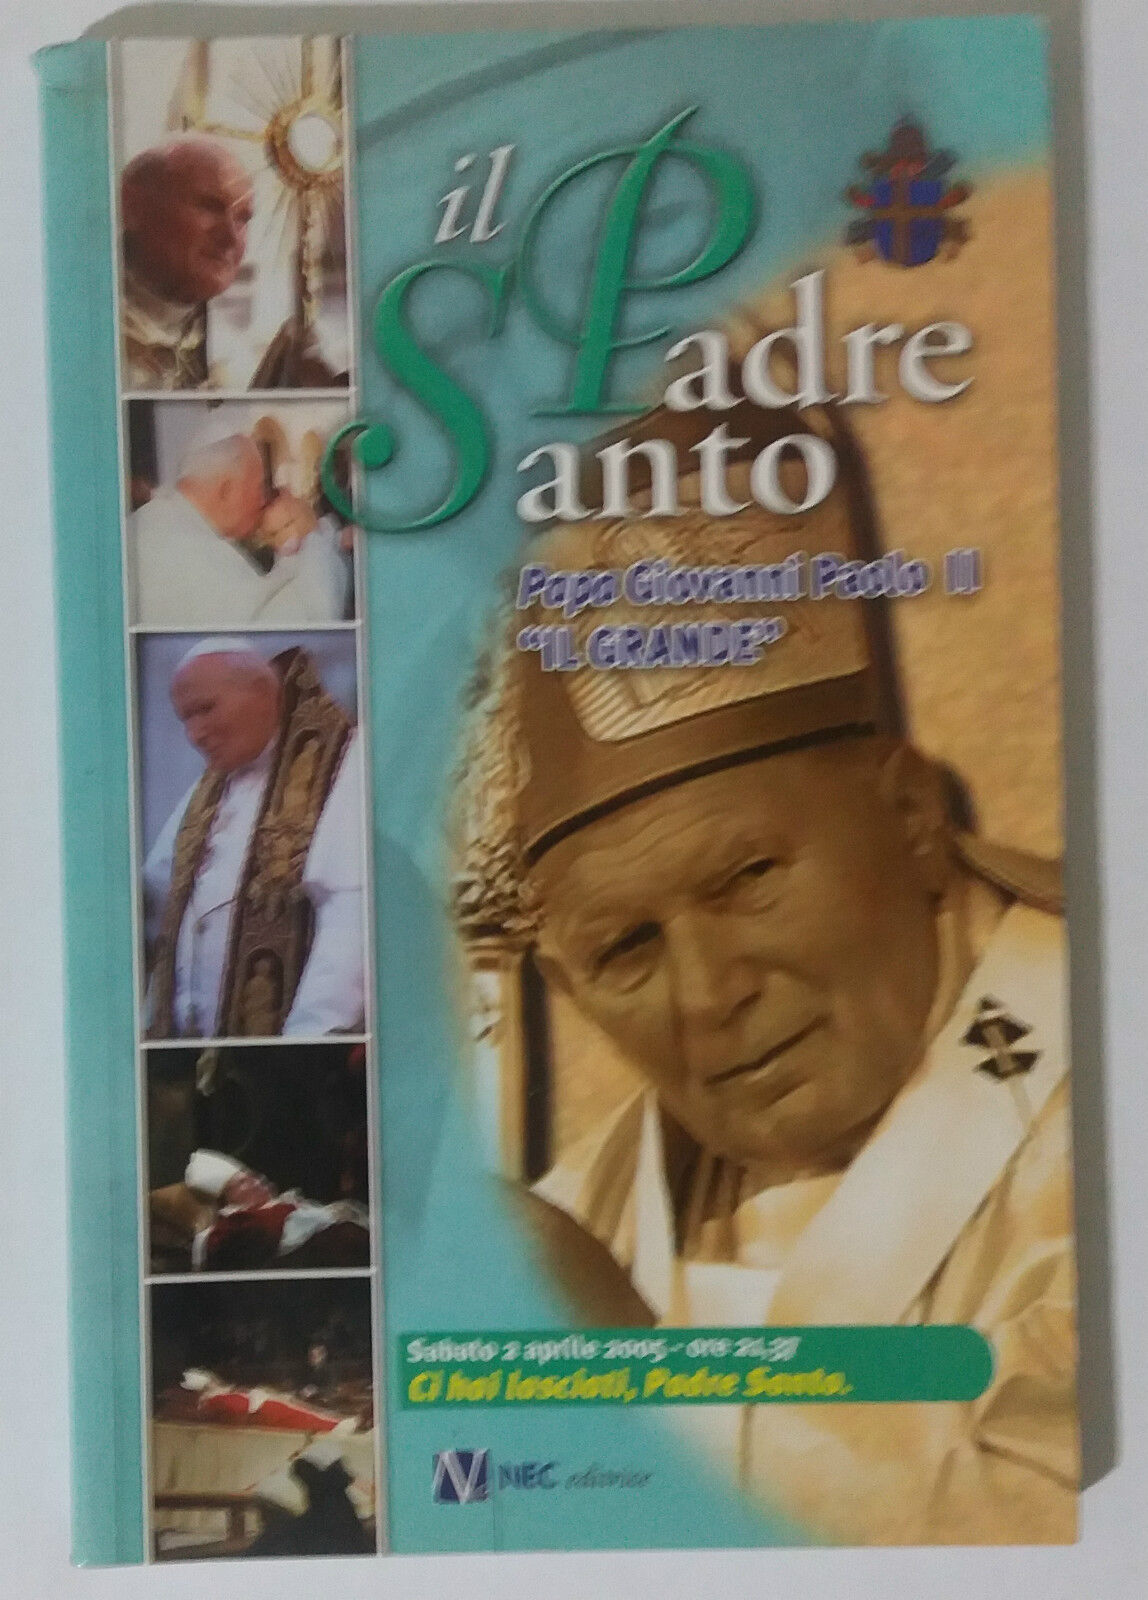 Il santo padre - AA. VV. - NEC Editrice - 2005 - G